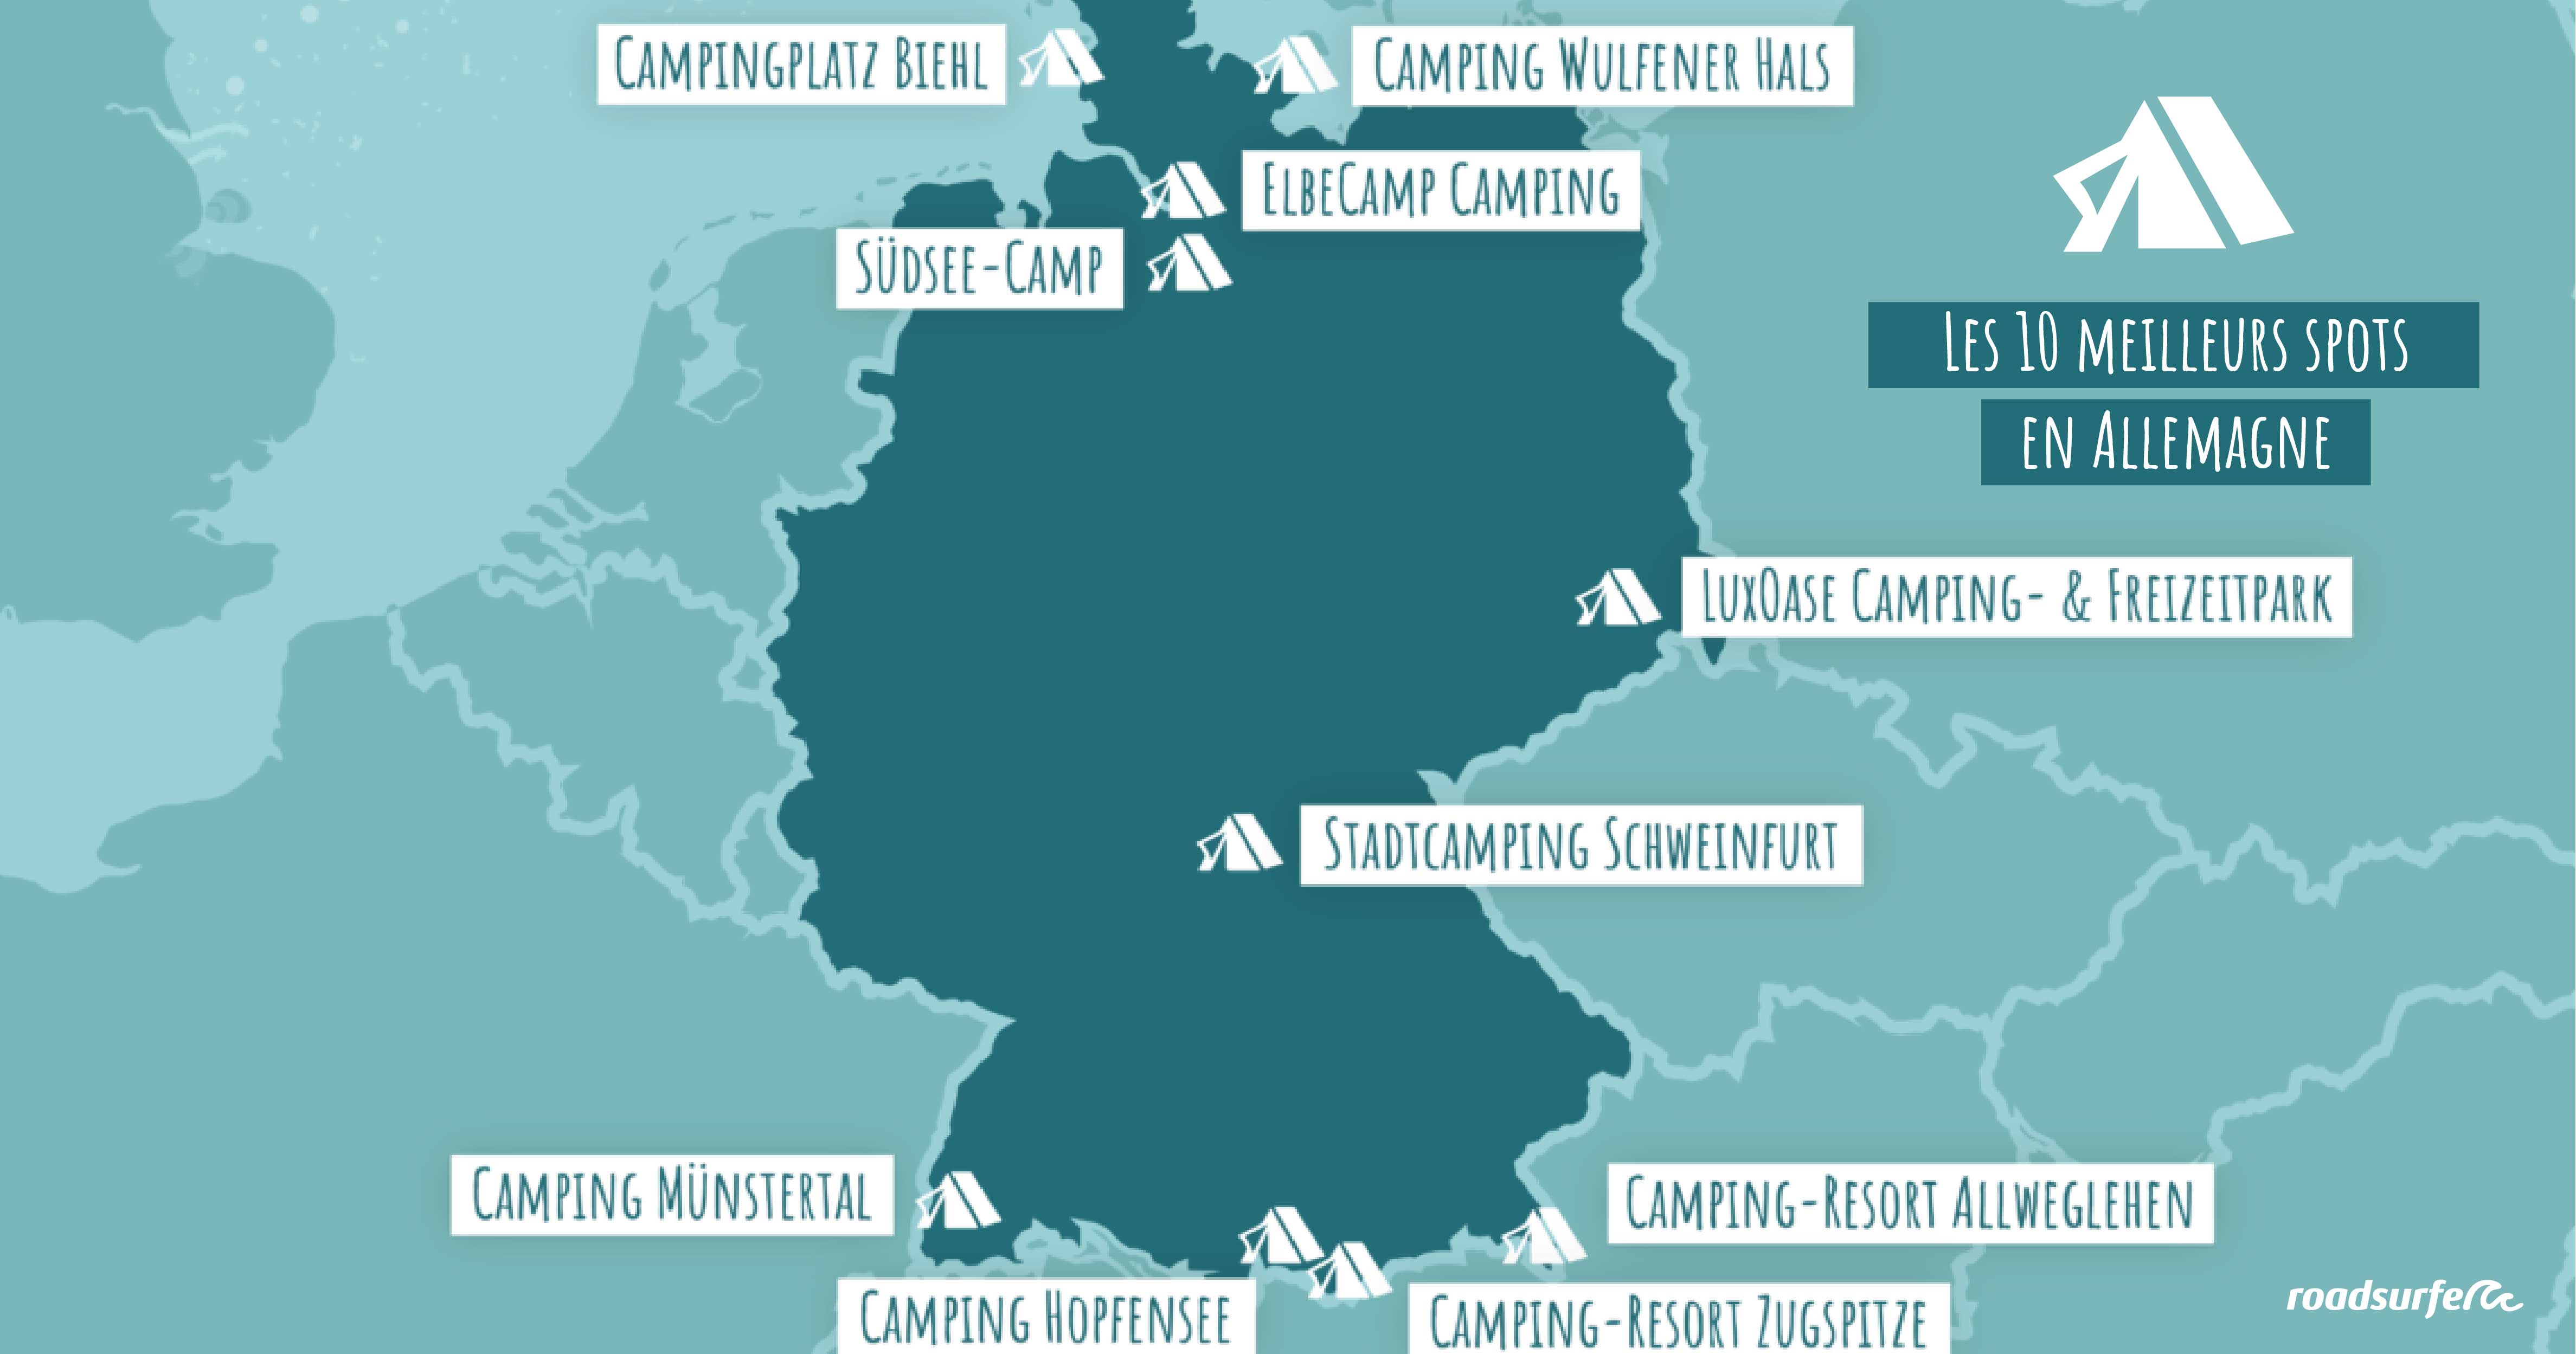 kabel zij is mengsel De 10 mooiste campings van Duitsland | roadsurfer.com ⛺